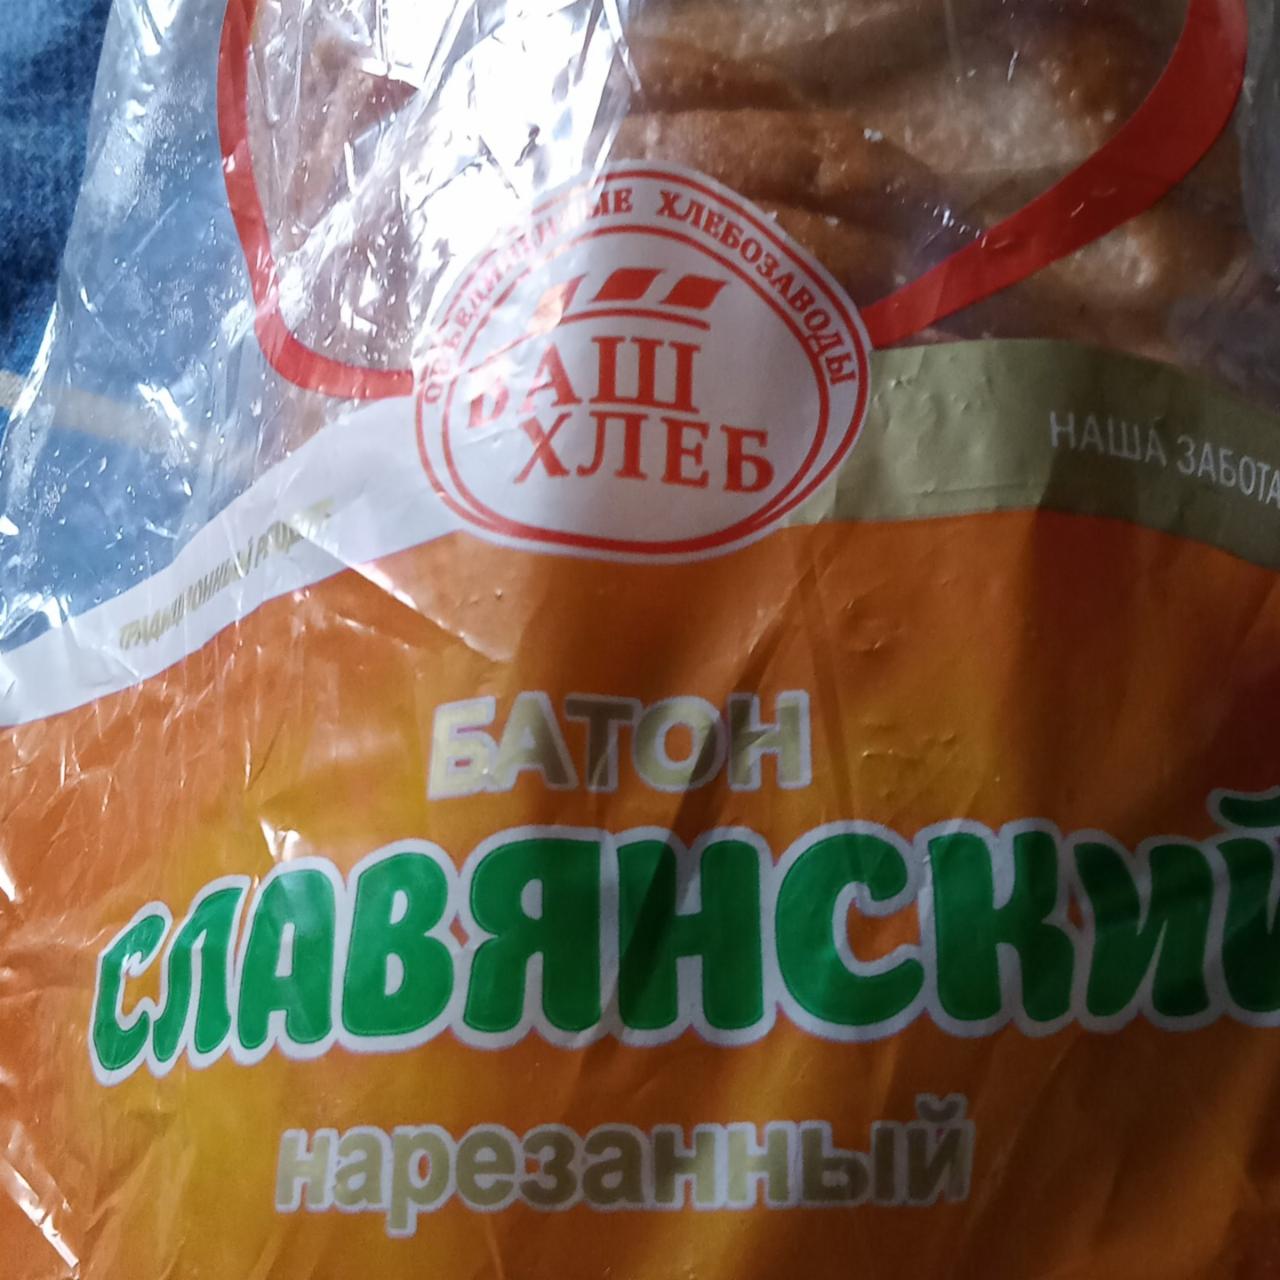 Фото - Батон славянский нарезанный Ваш хлеб